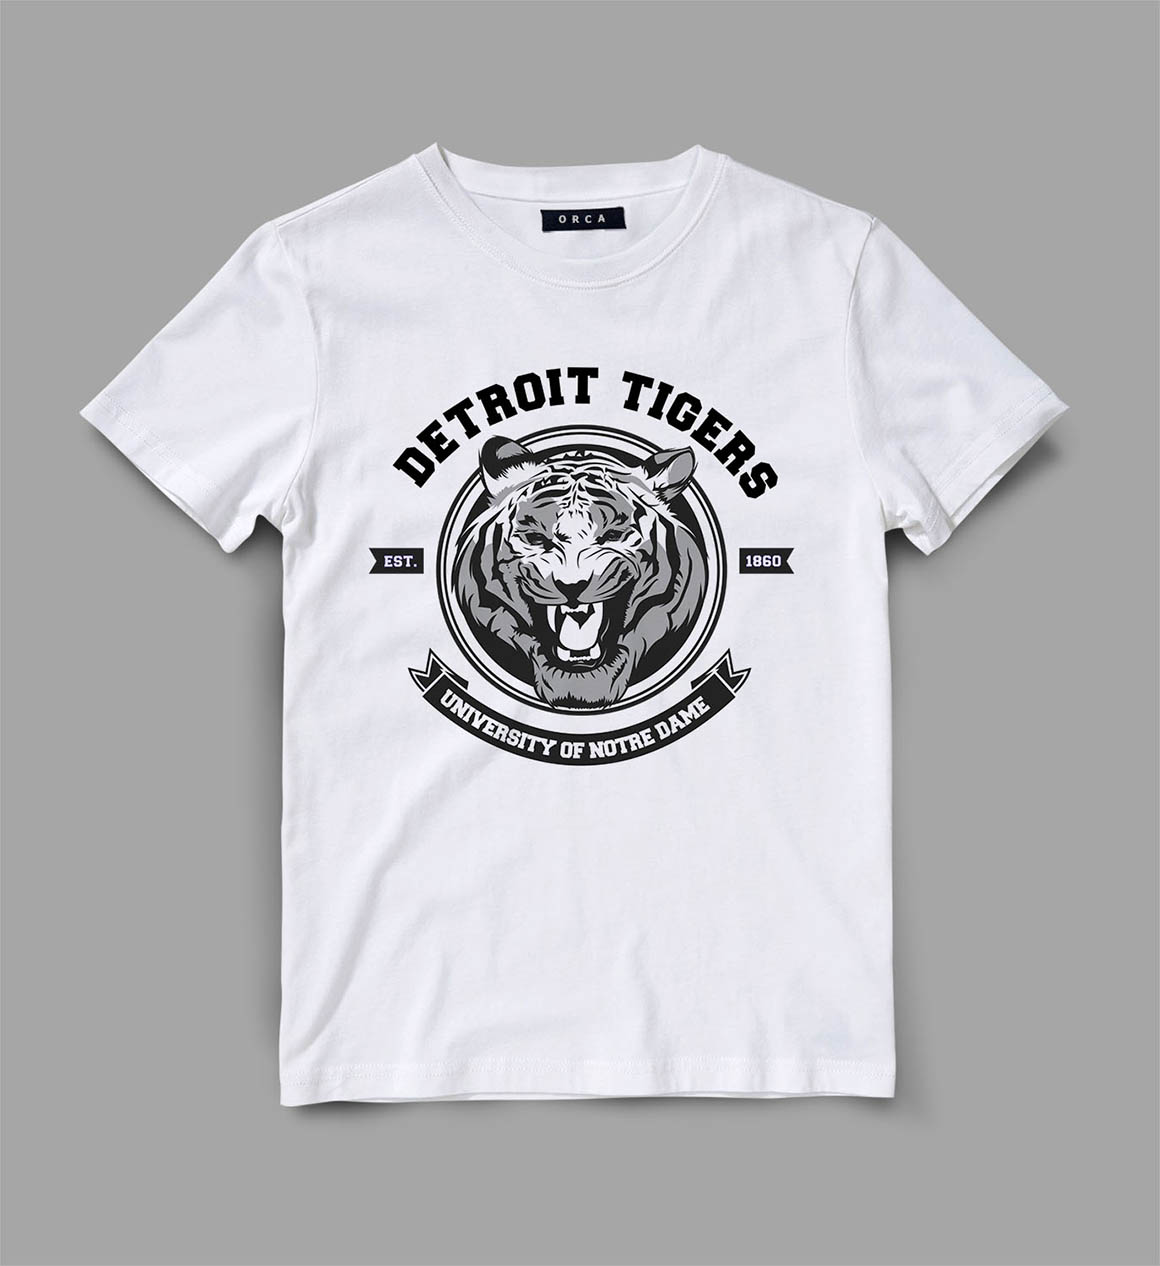 101 T-shirt Designs with Animals - Dealjumbo